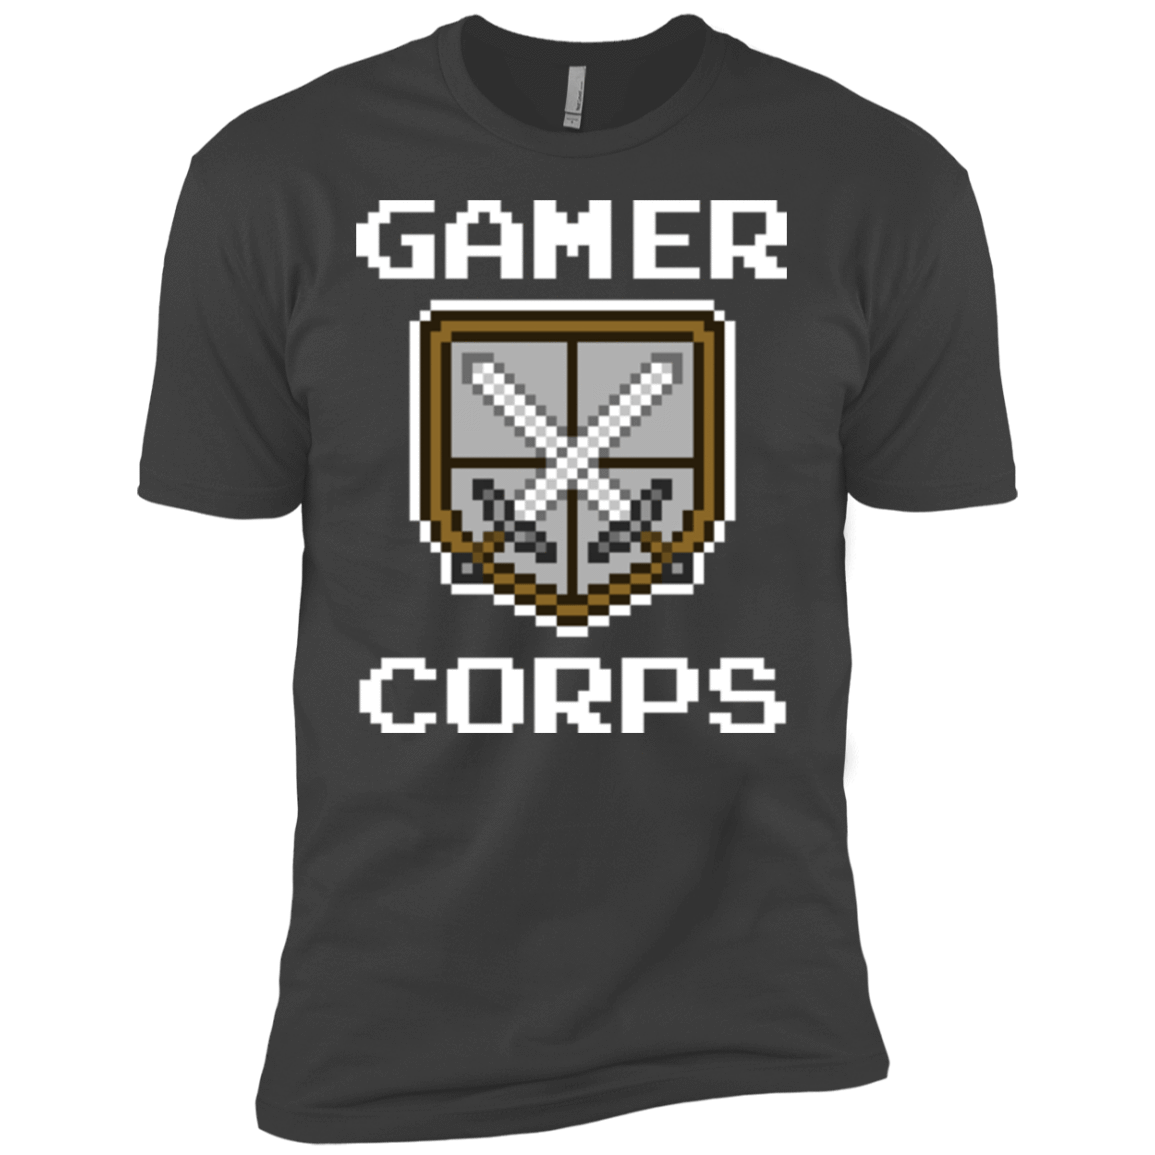 T-Shirts Heavy Metal / YXS Gamer corps Boys Premium T-Shirt